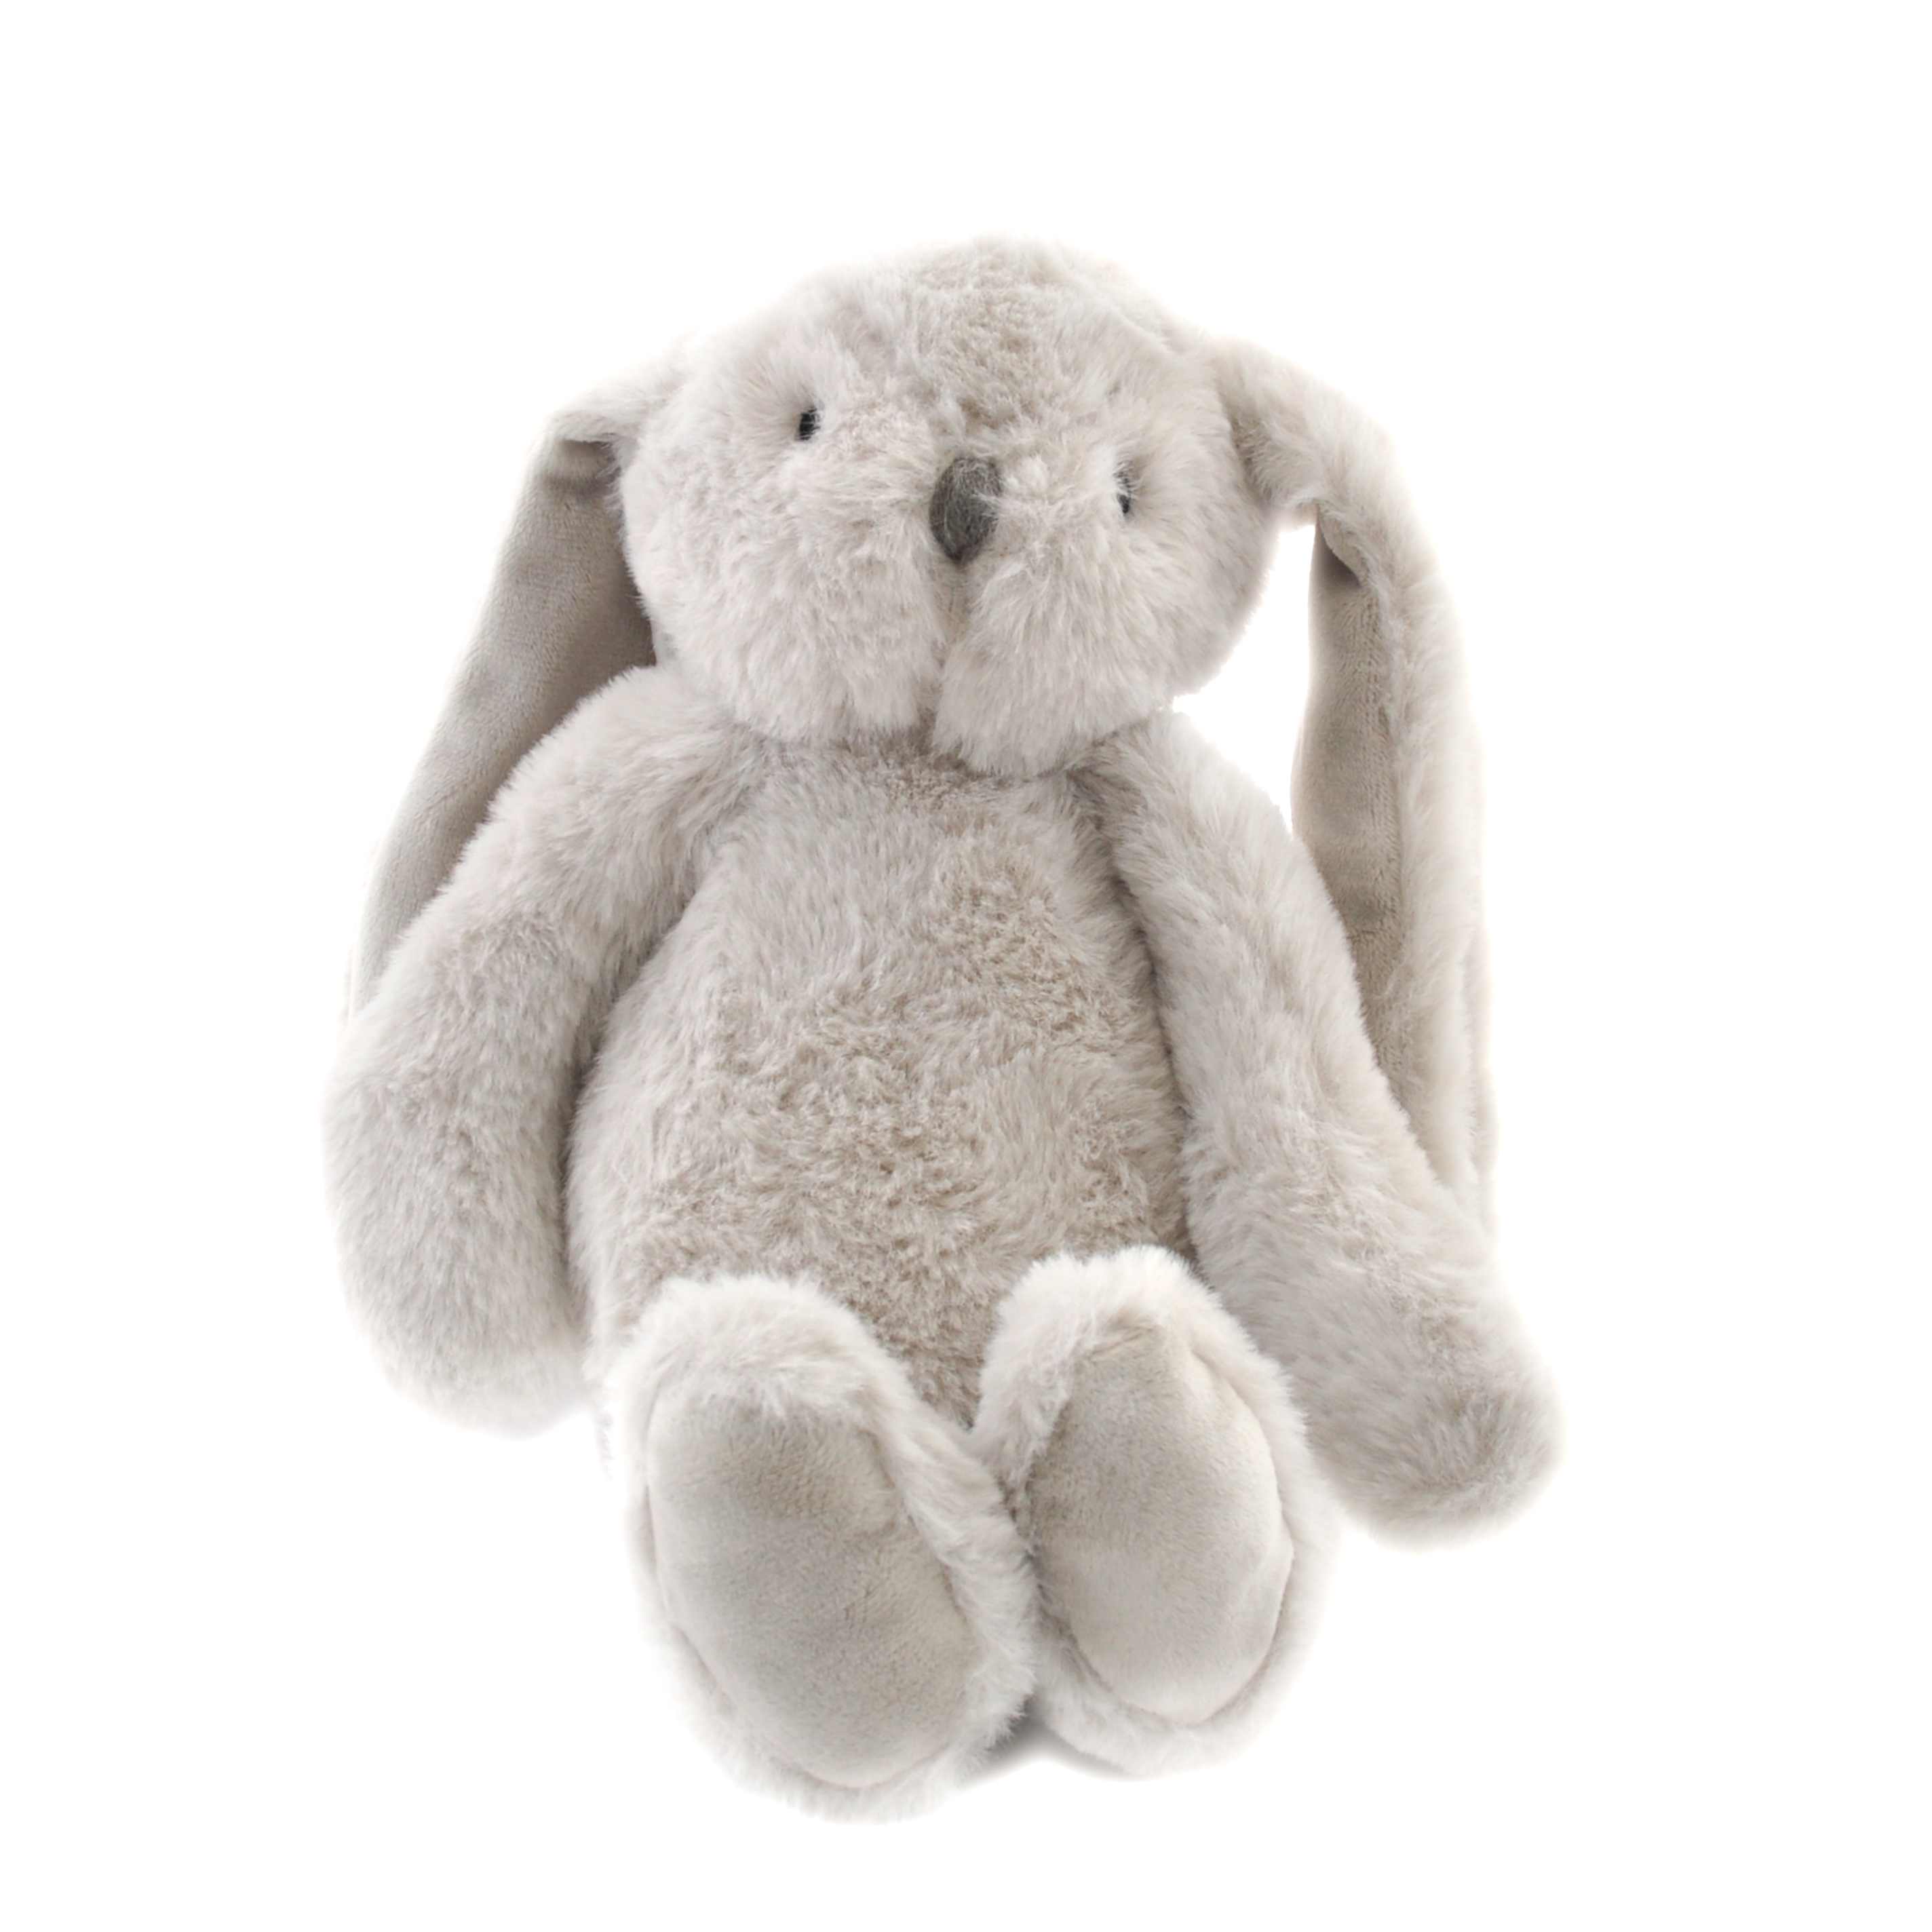 Baby Plush Toy - Bunny Light Grey